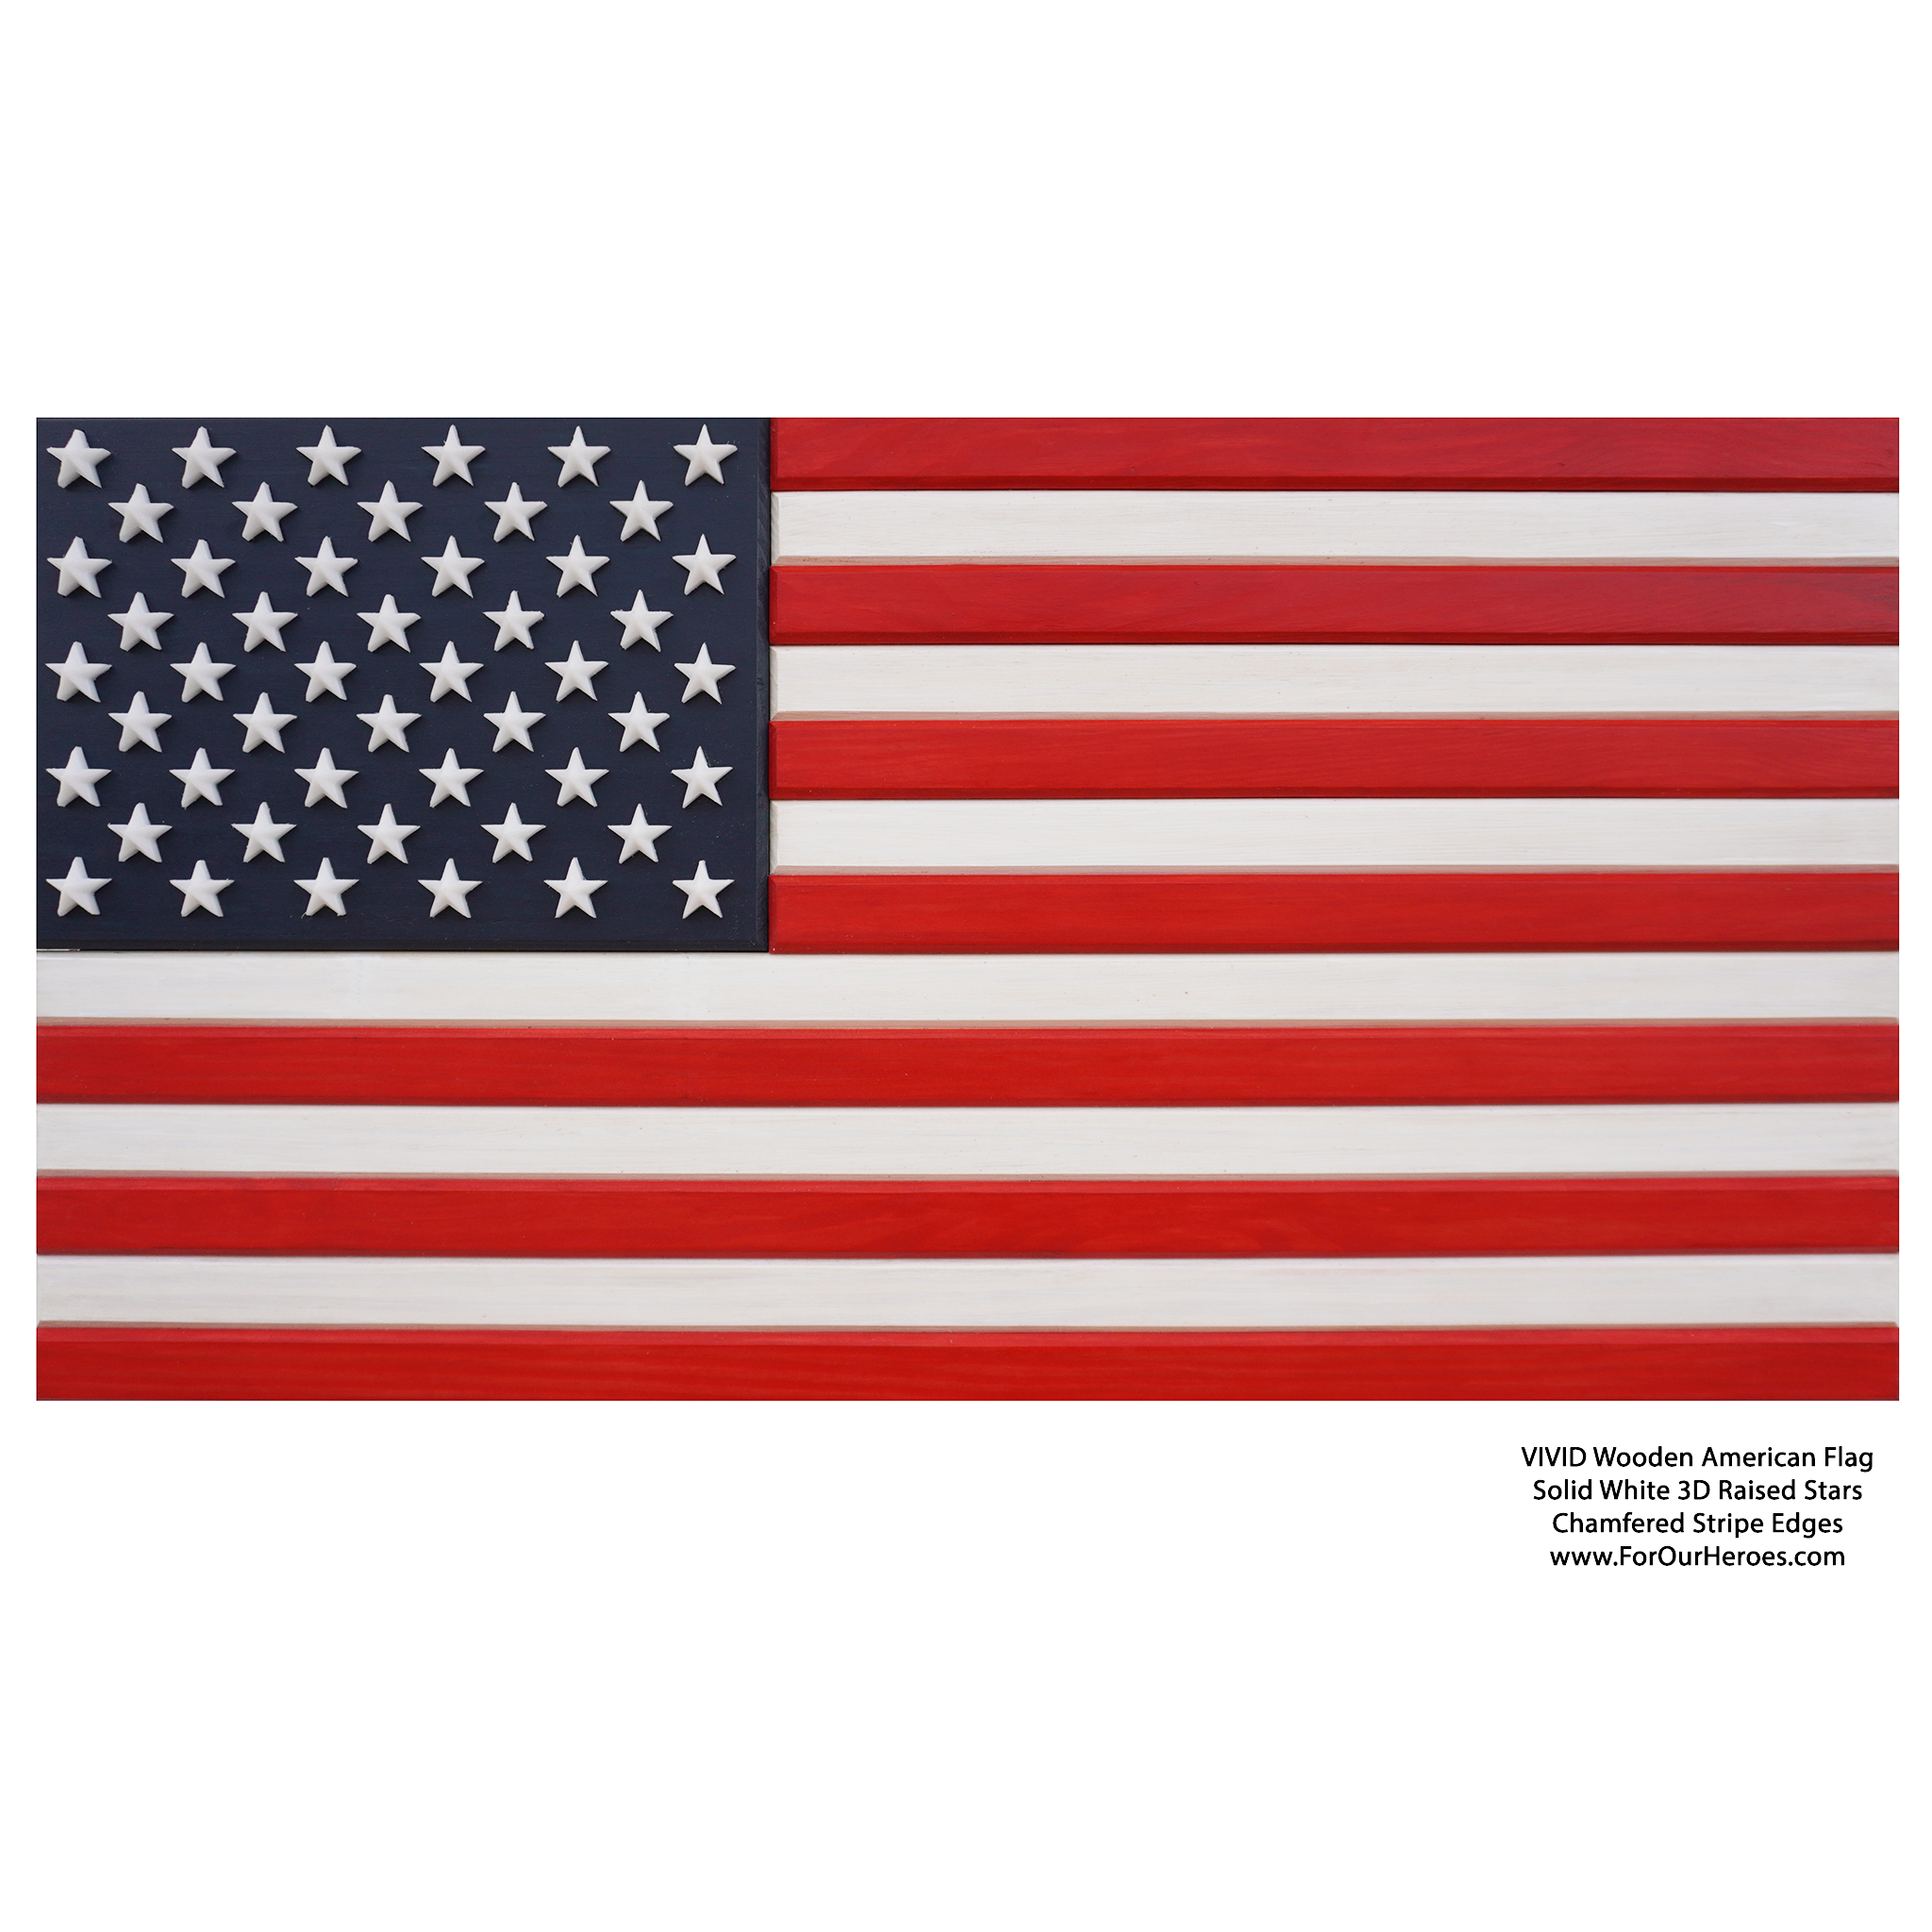 2D VIVID American Flag